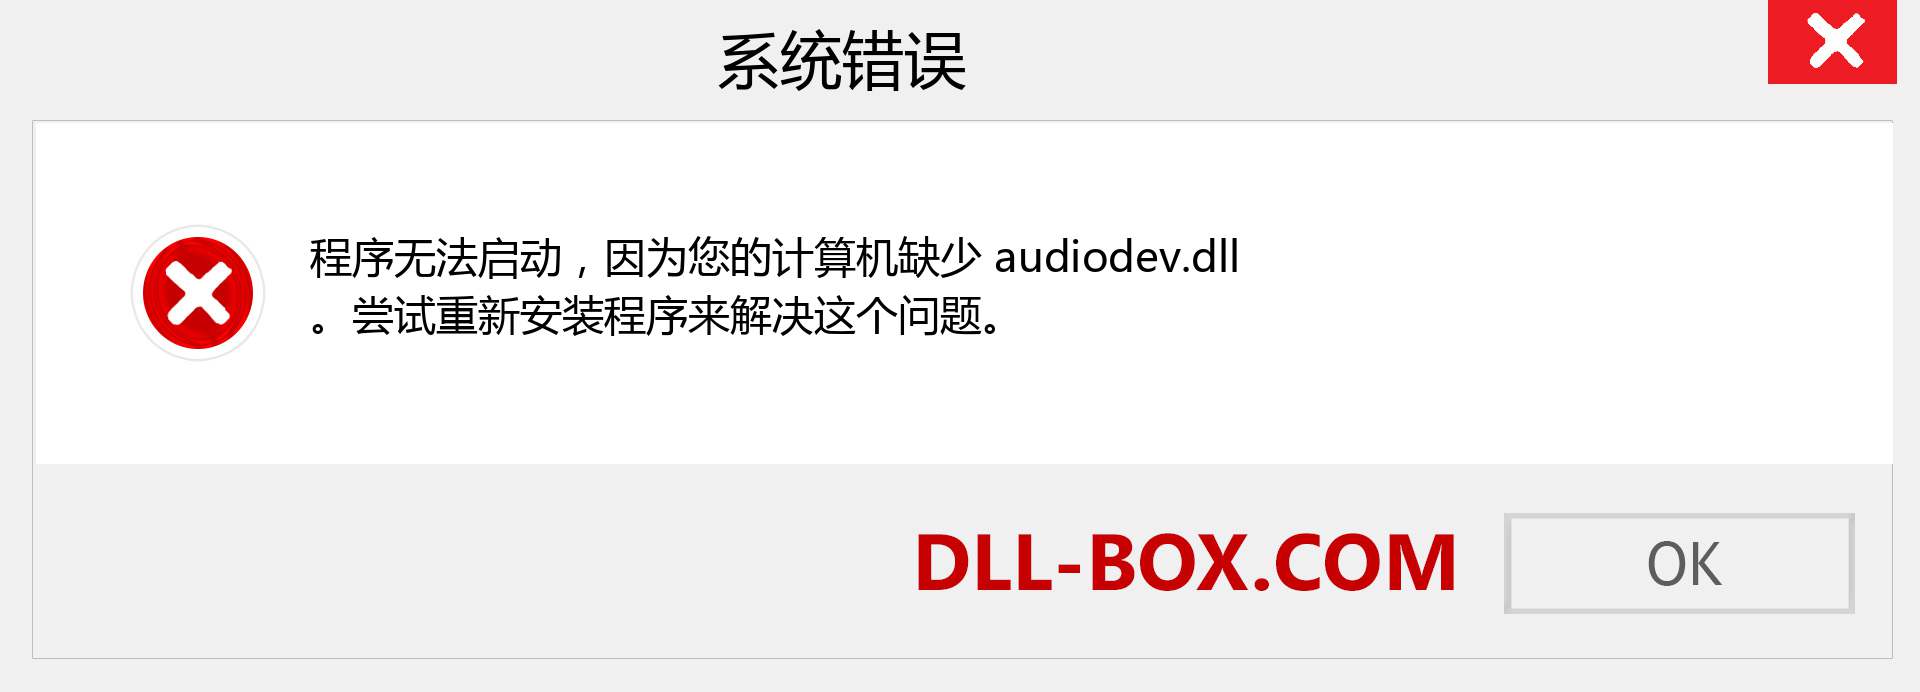 audiodev.dll 文件丢失？。 适用于 Windows 7、8、10 的下载 - 修复 Windows、照片、图像上的 audiodev dll 丢失错误